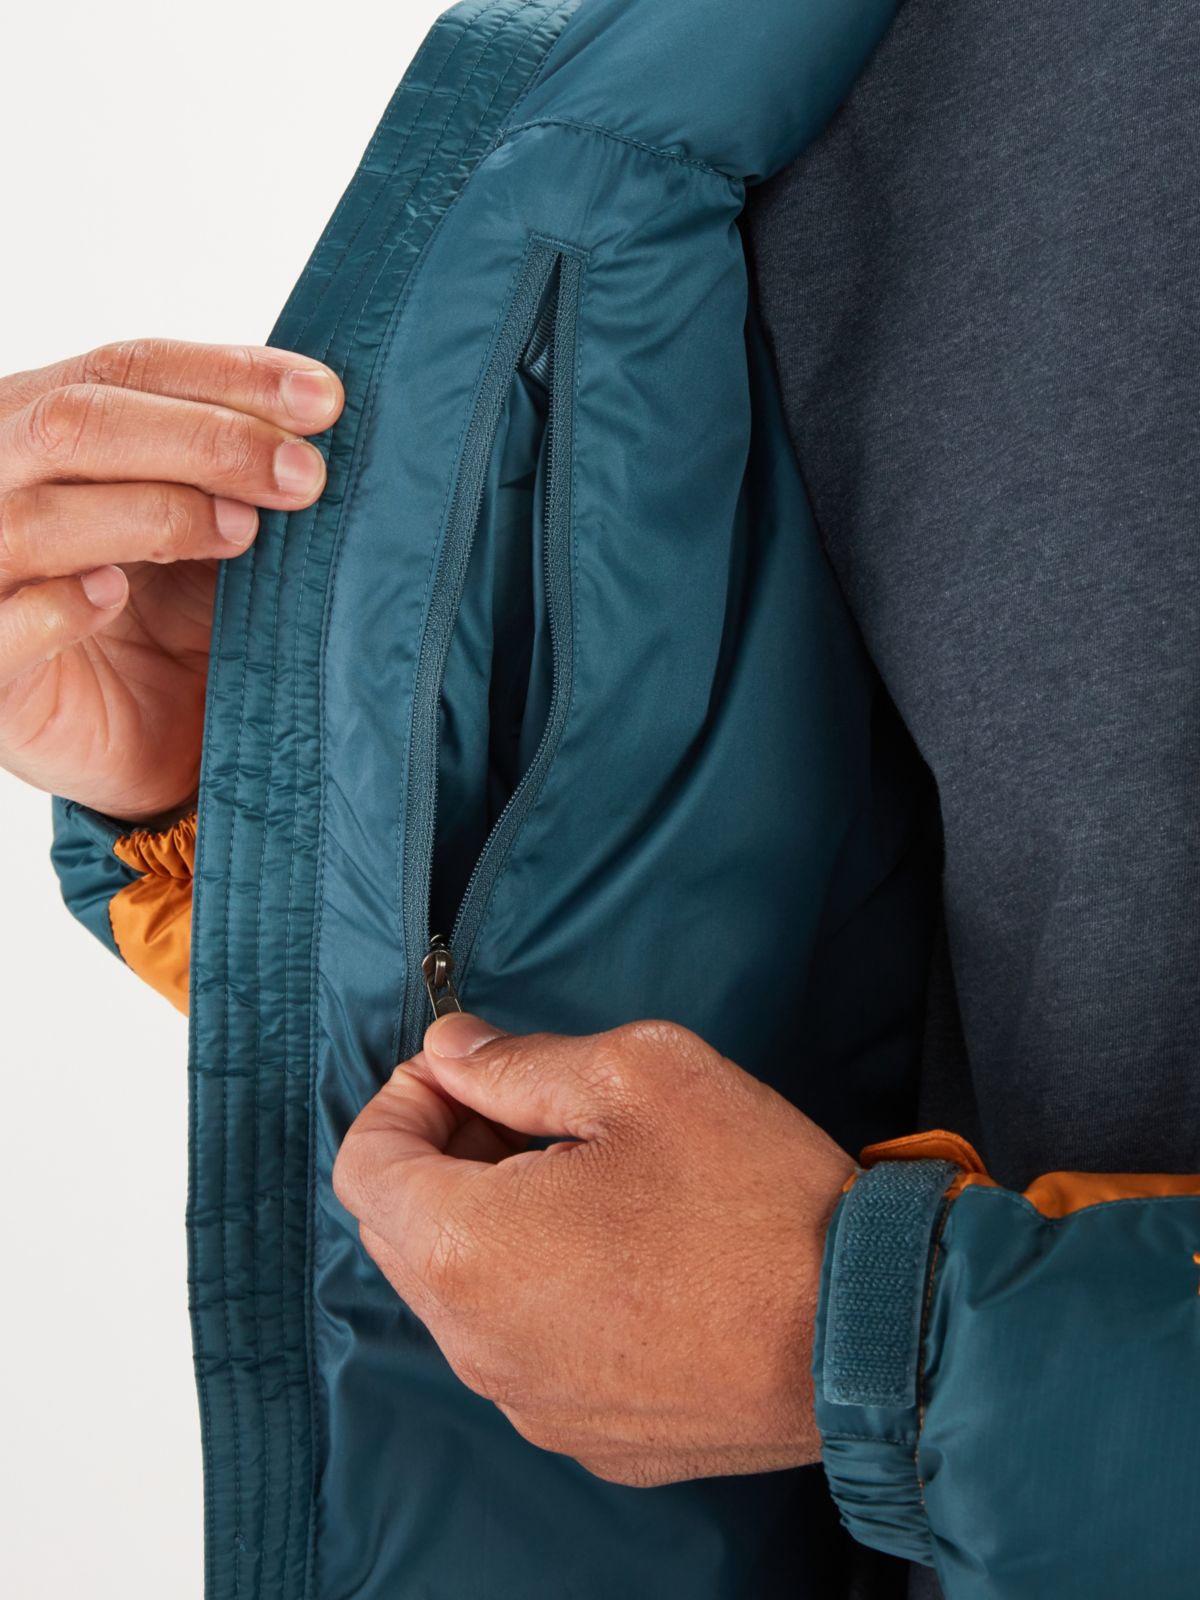 Closeup of zipper on a jacket